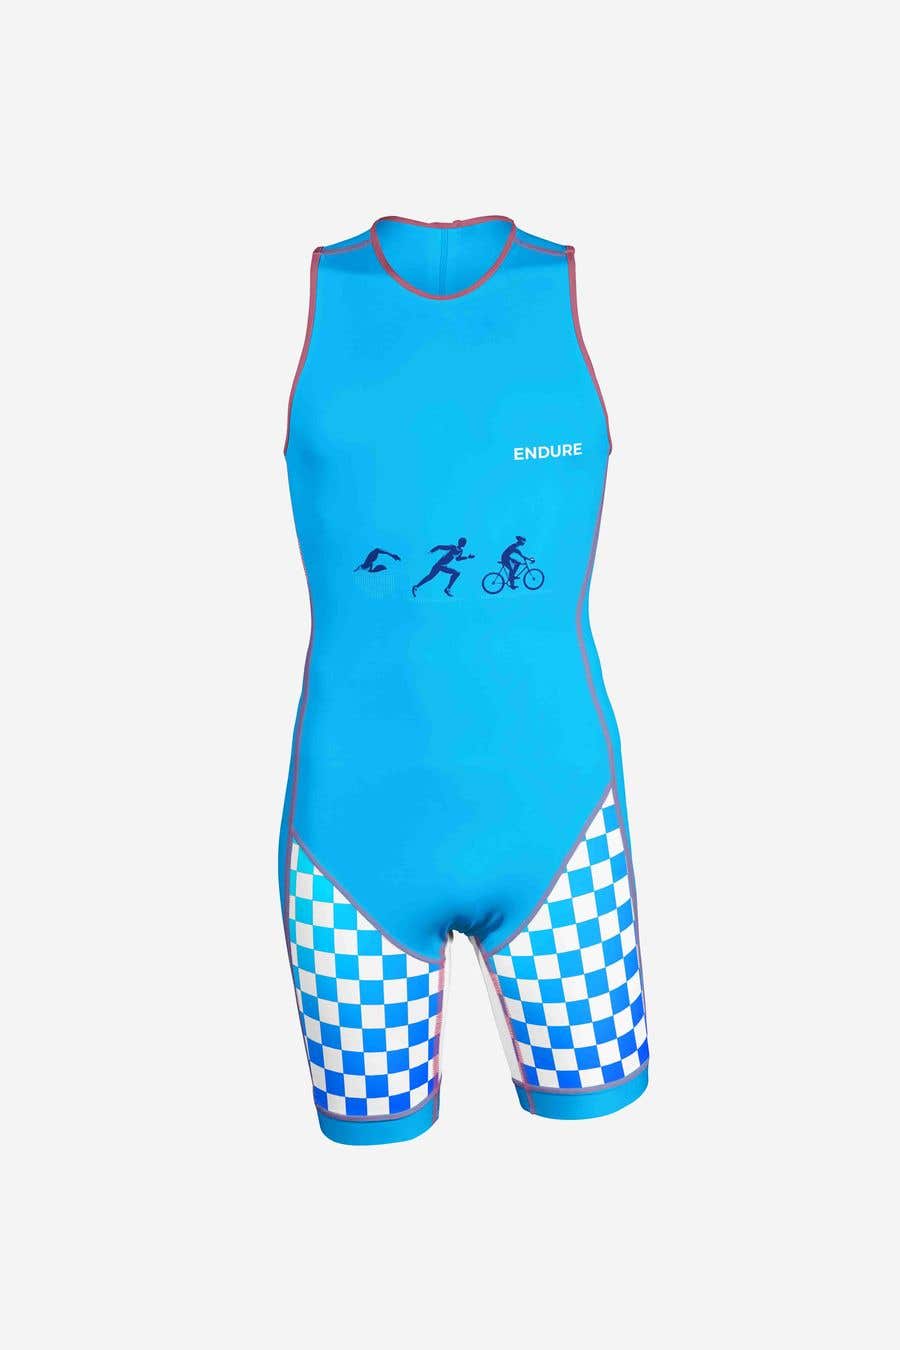 Kilpailutyö #27 kilpailussa                                                 designing a triathlon "kit" (1 piece suit)
                                            